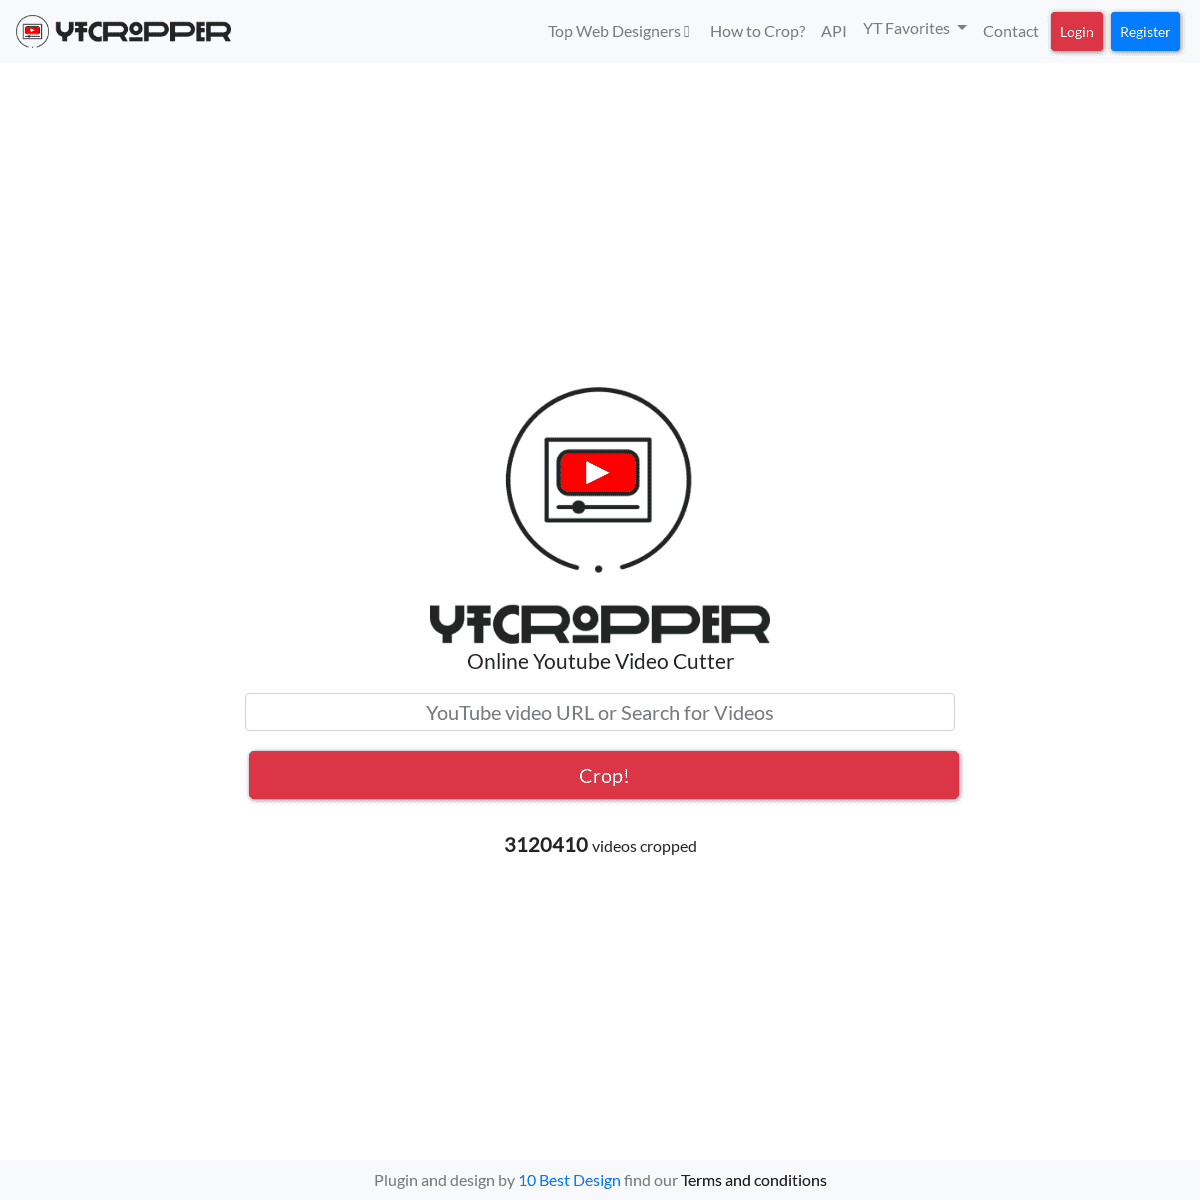 A complete backup of ytcropper.com